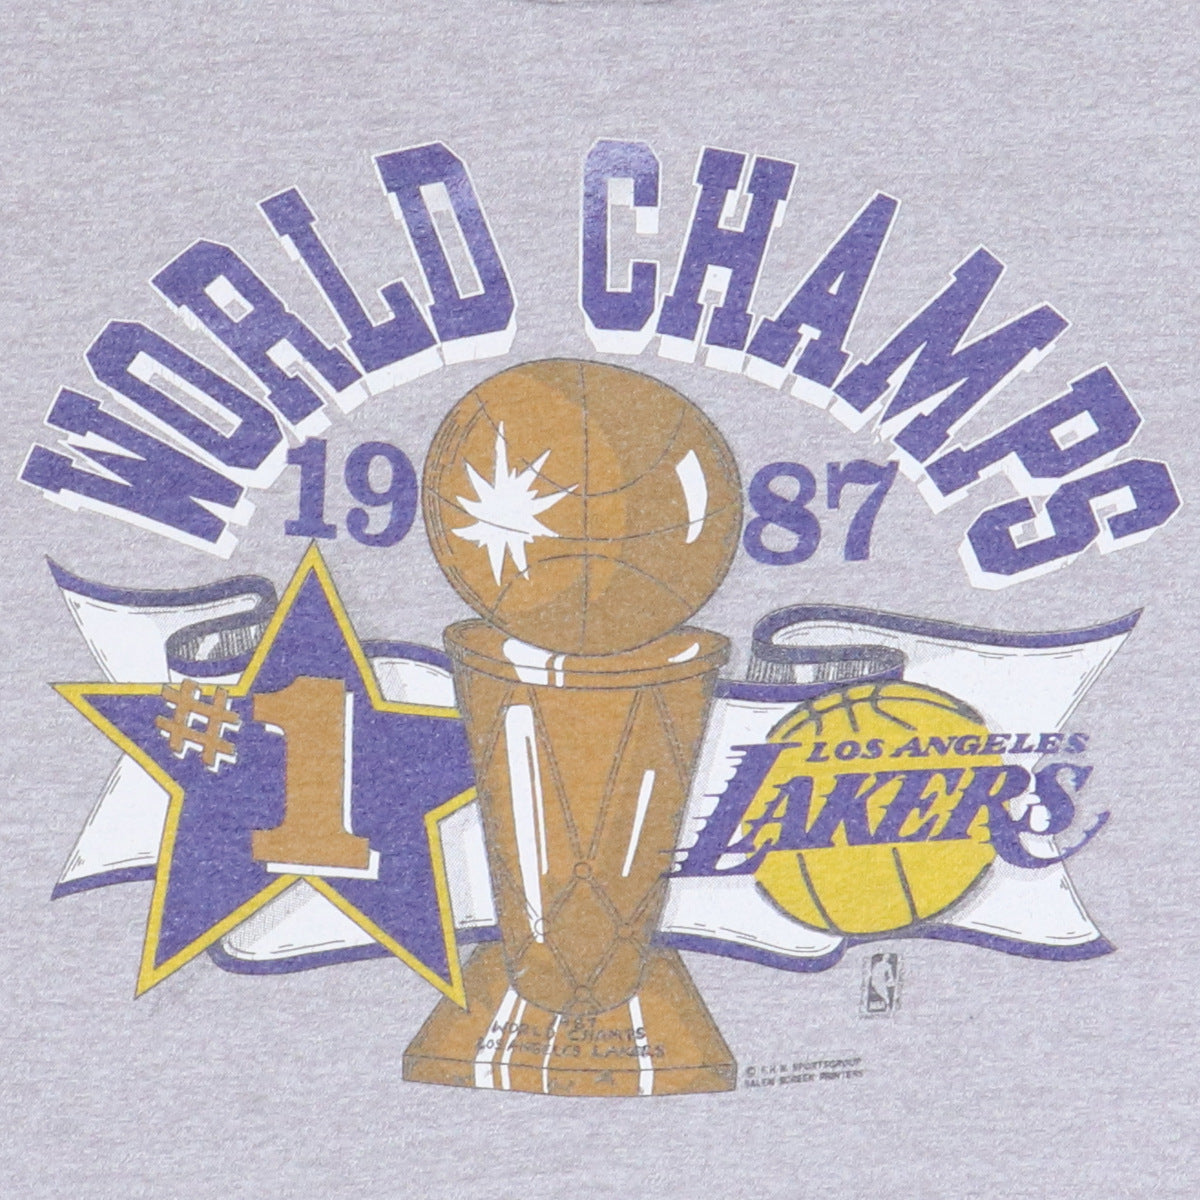 Shirts  Vintage La Lakers 88 87 World Champs Back To Back T Shirt